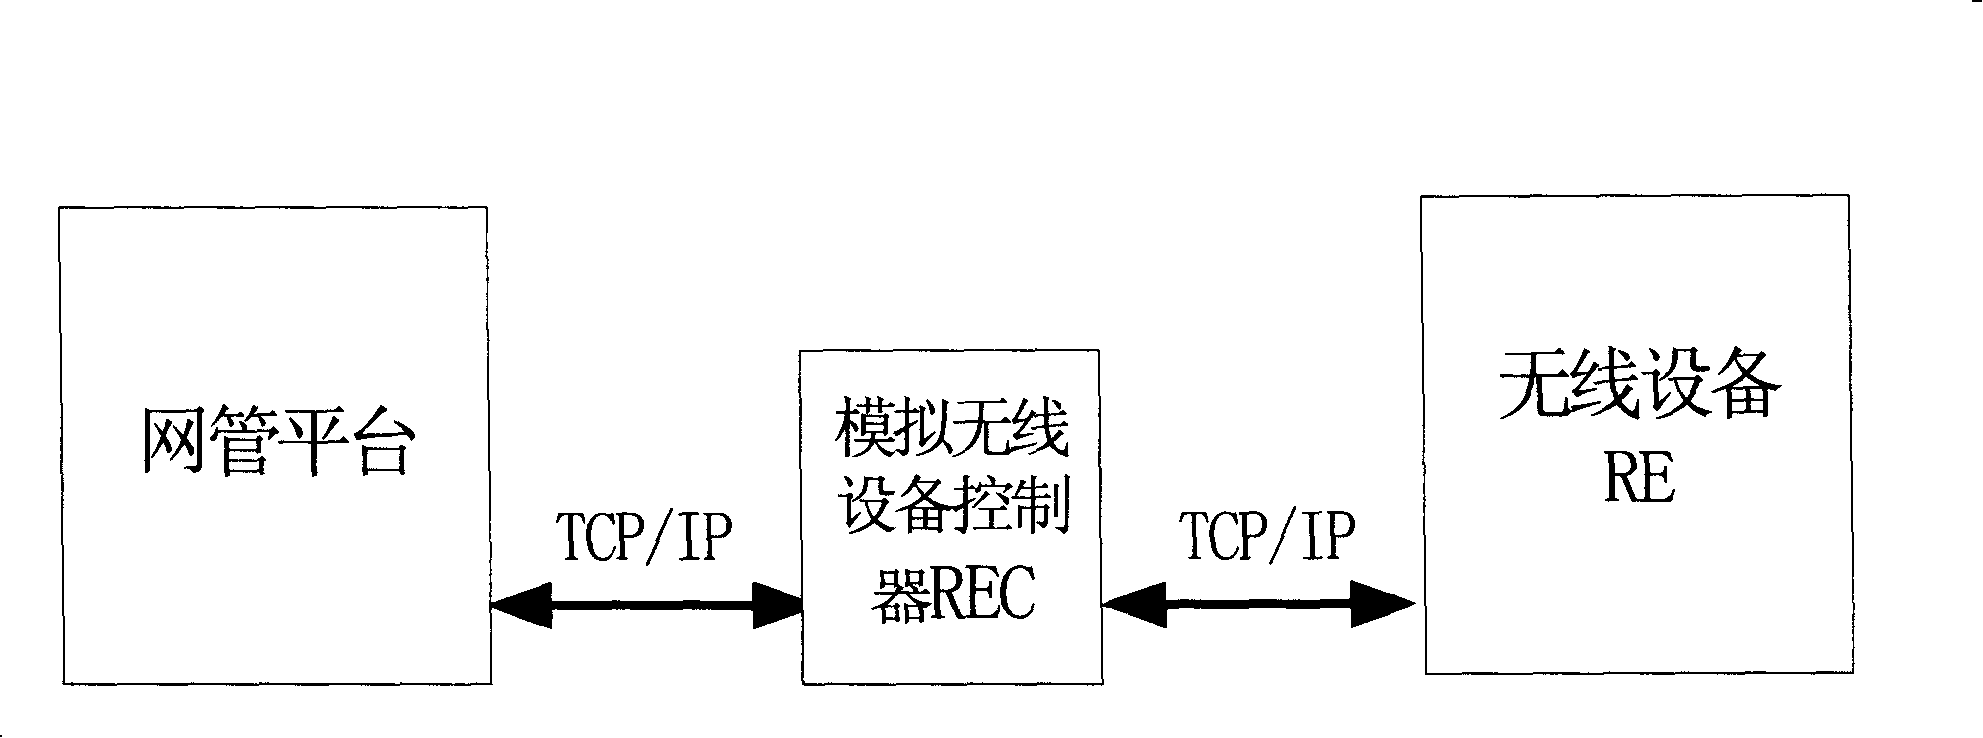 A remote RF unit access method for network management platform